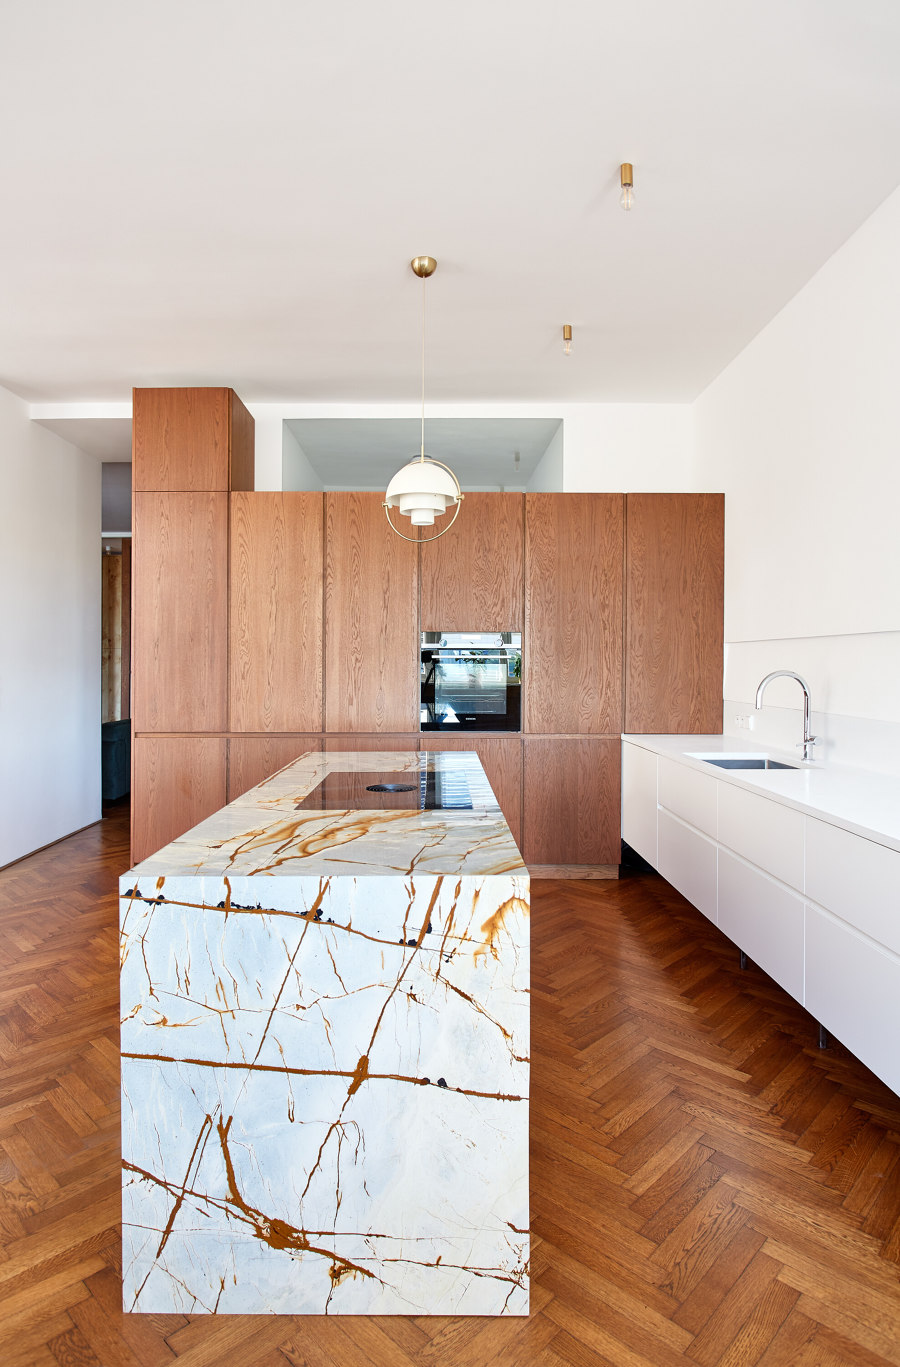 How to maximise the interior design value of a kitchen | Novità